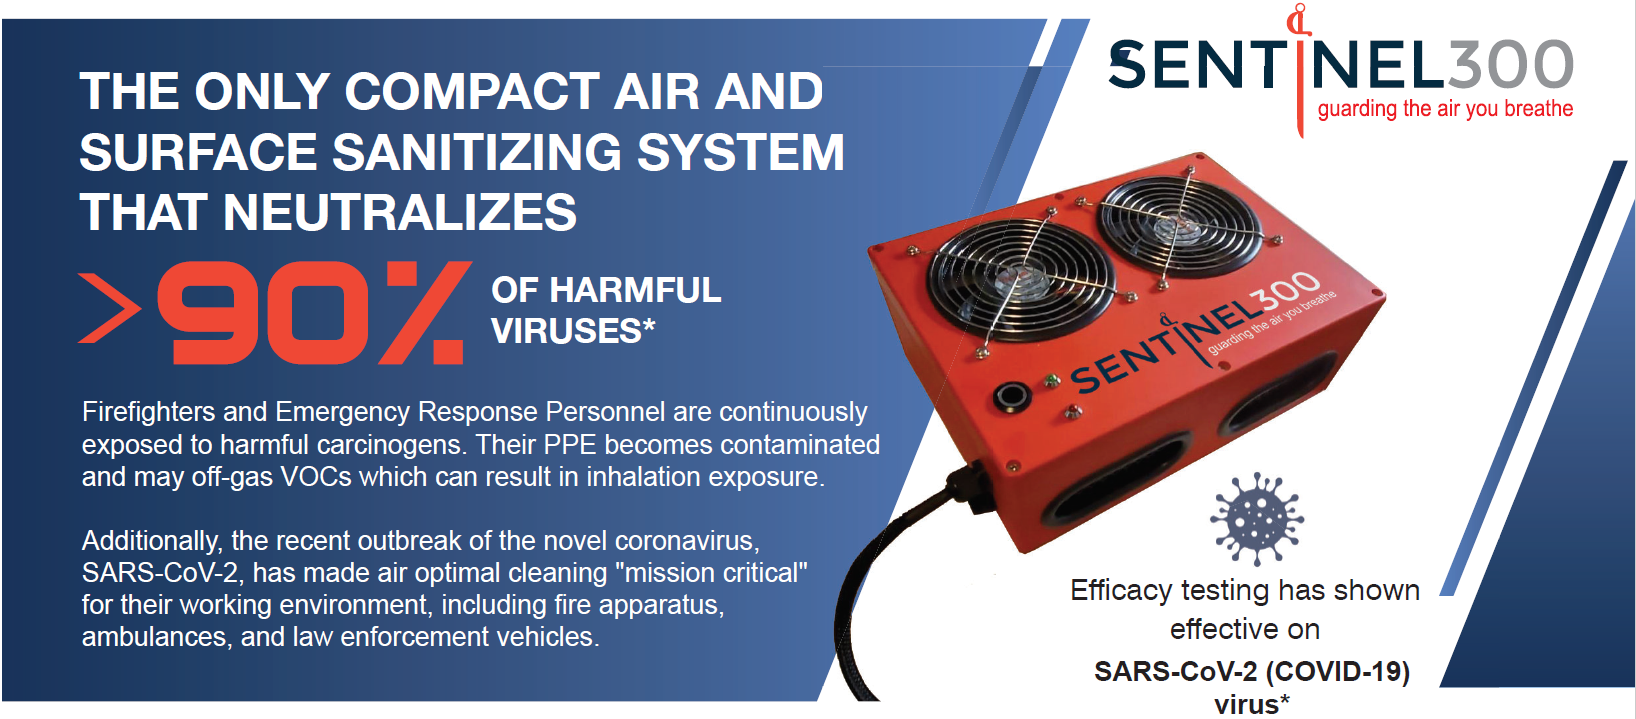 Sentinel 300 Sanitizing System